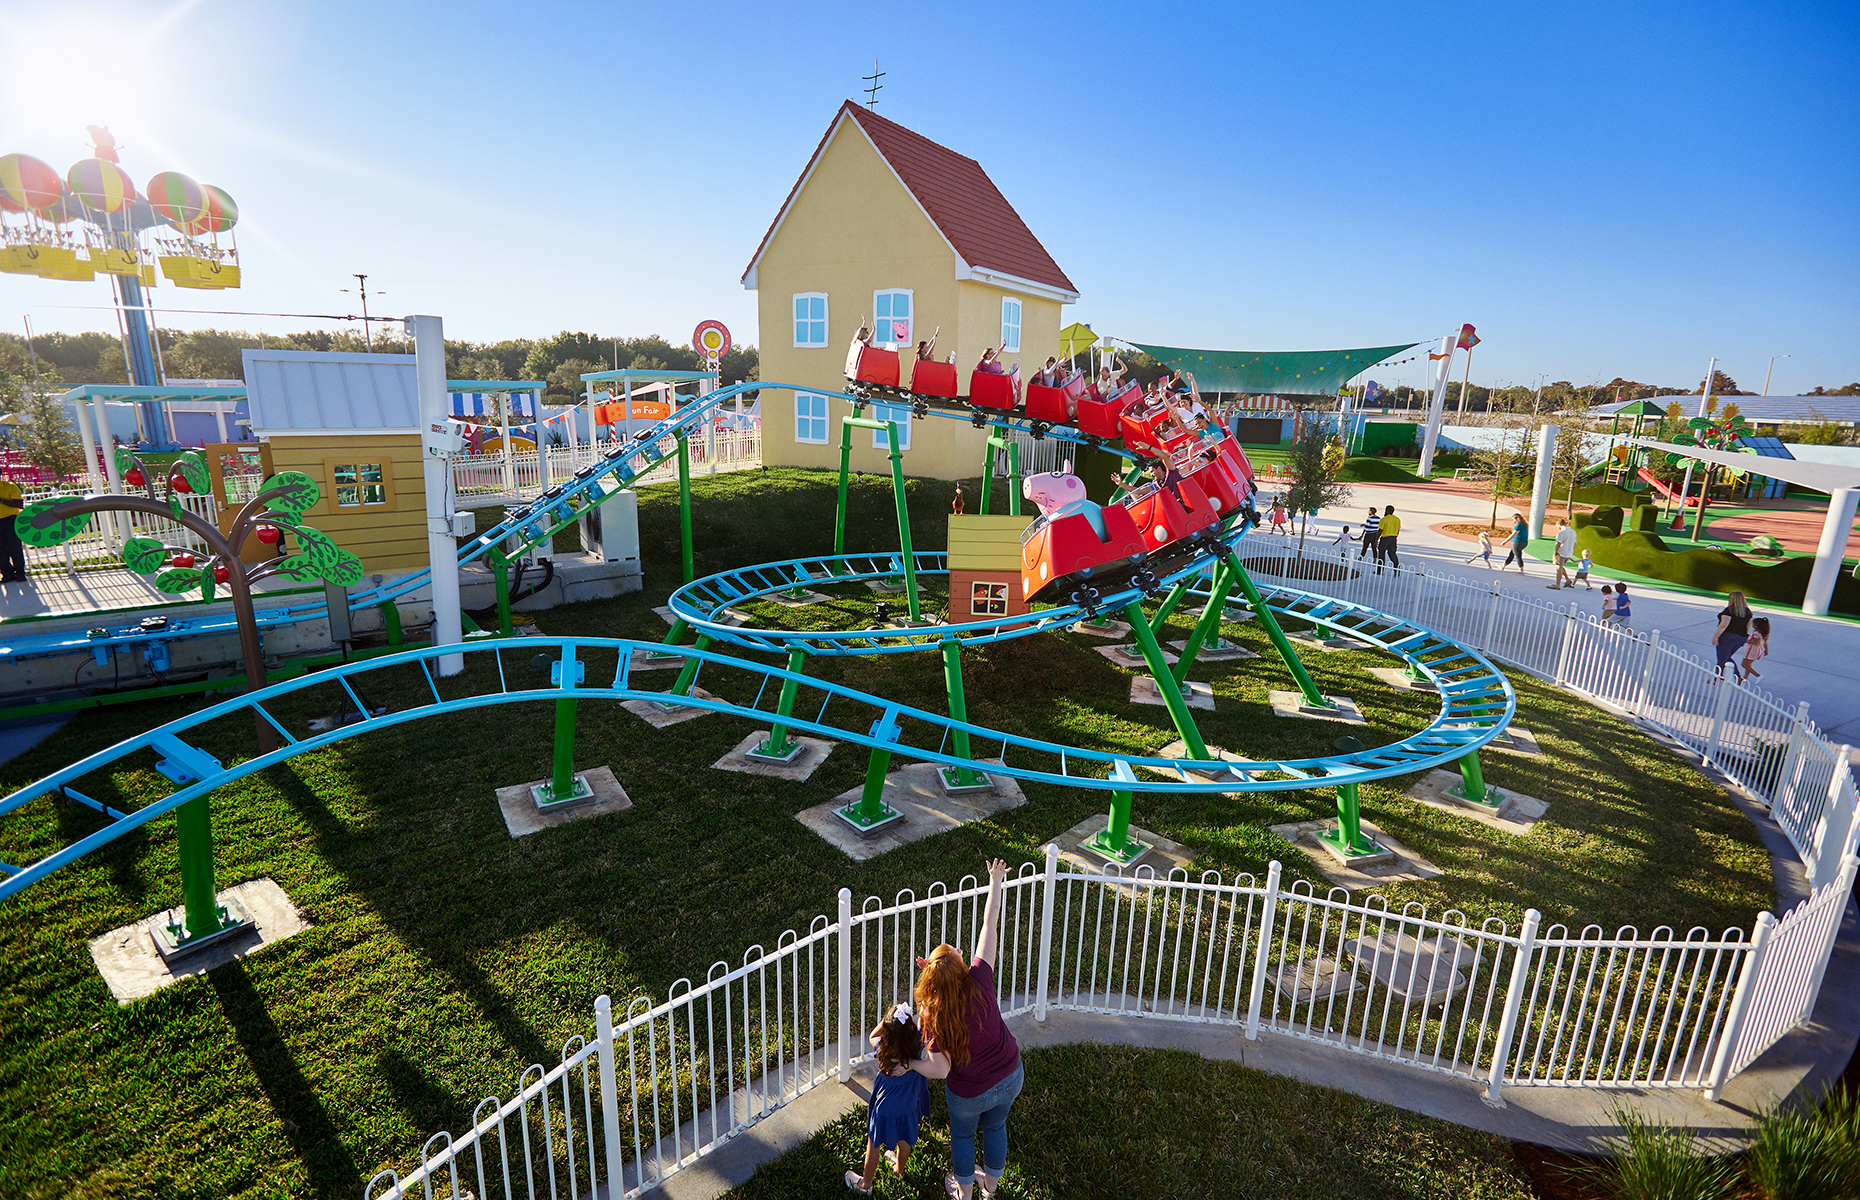 Daddy Pig's Roller Coaster, Peppa Pig Theme Park, Orlando, Florida (Image: Peppa Pig Theme Park)